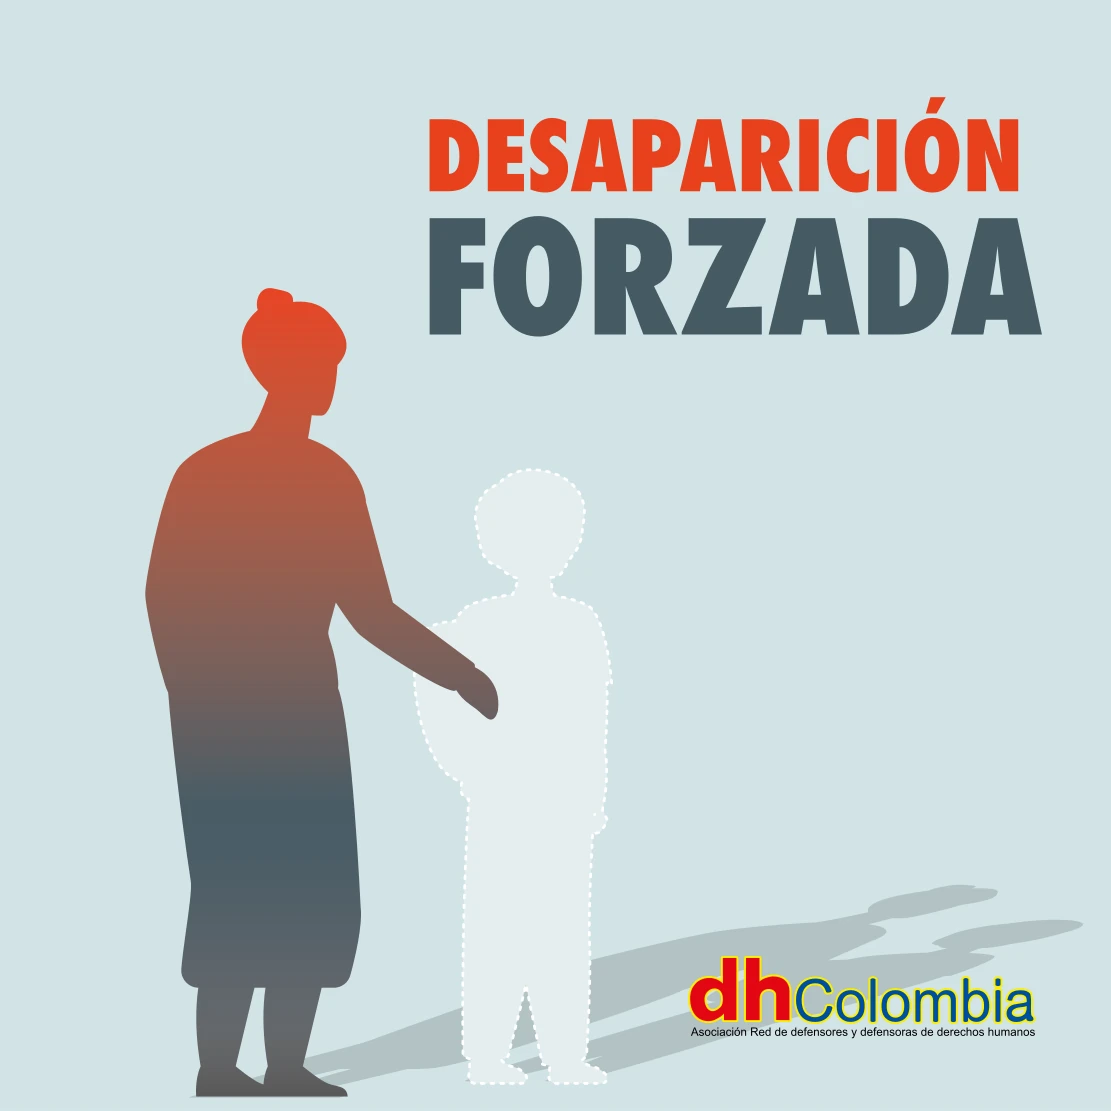 dhColombia Desaparición forzada 1.01 DESAPARICION FORZADA